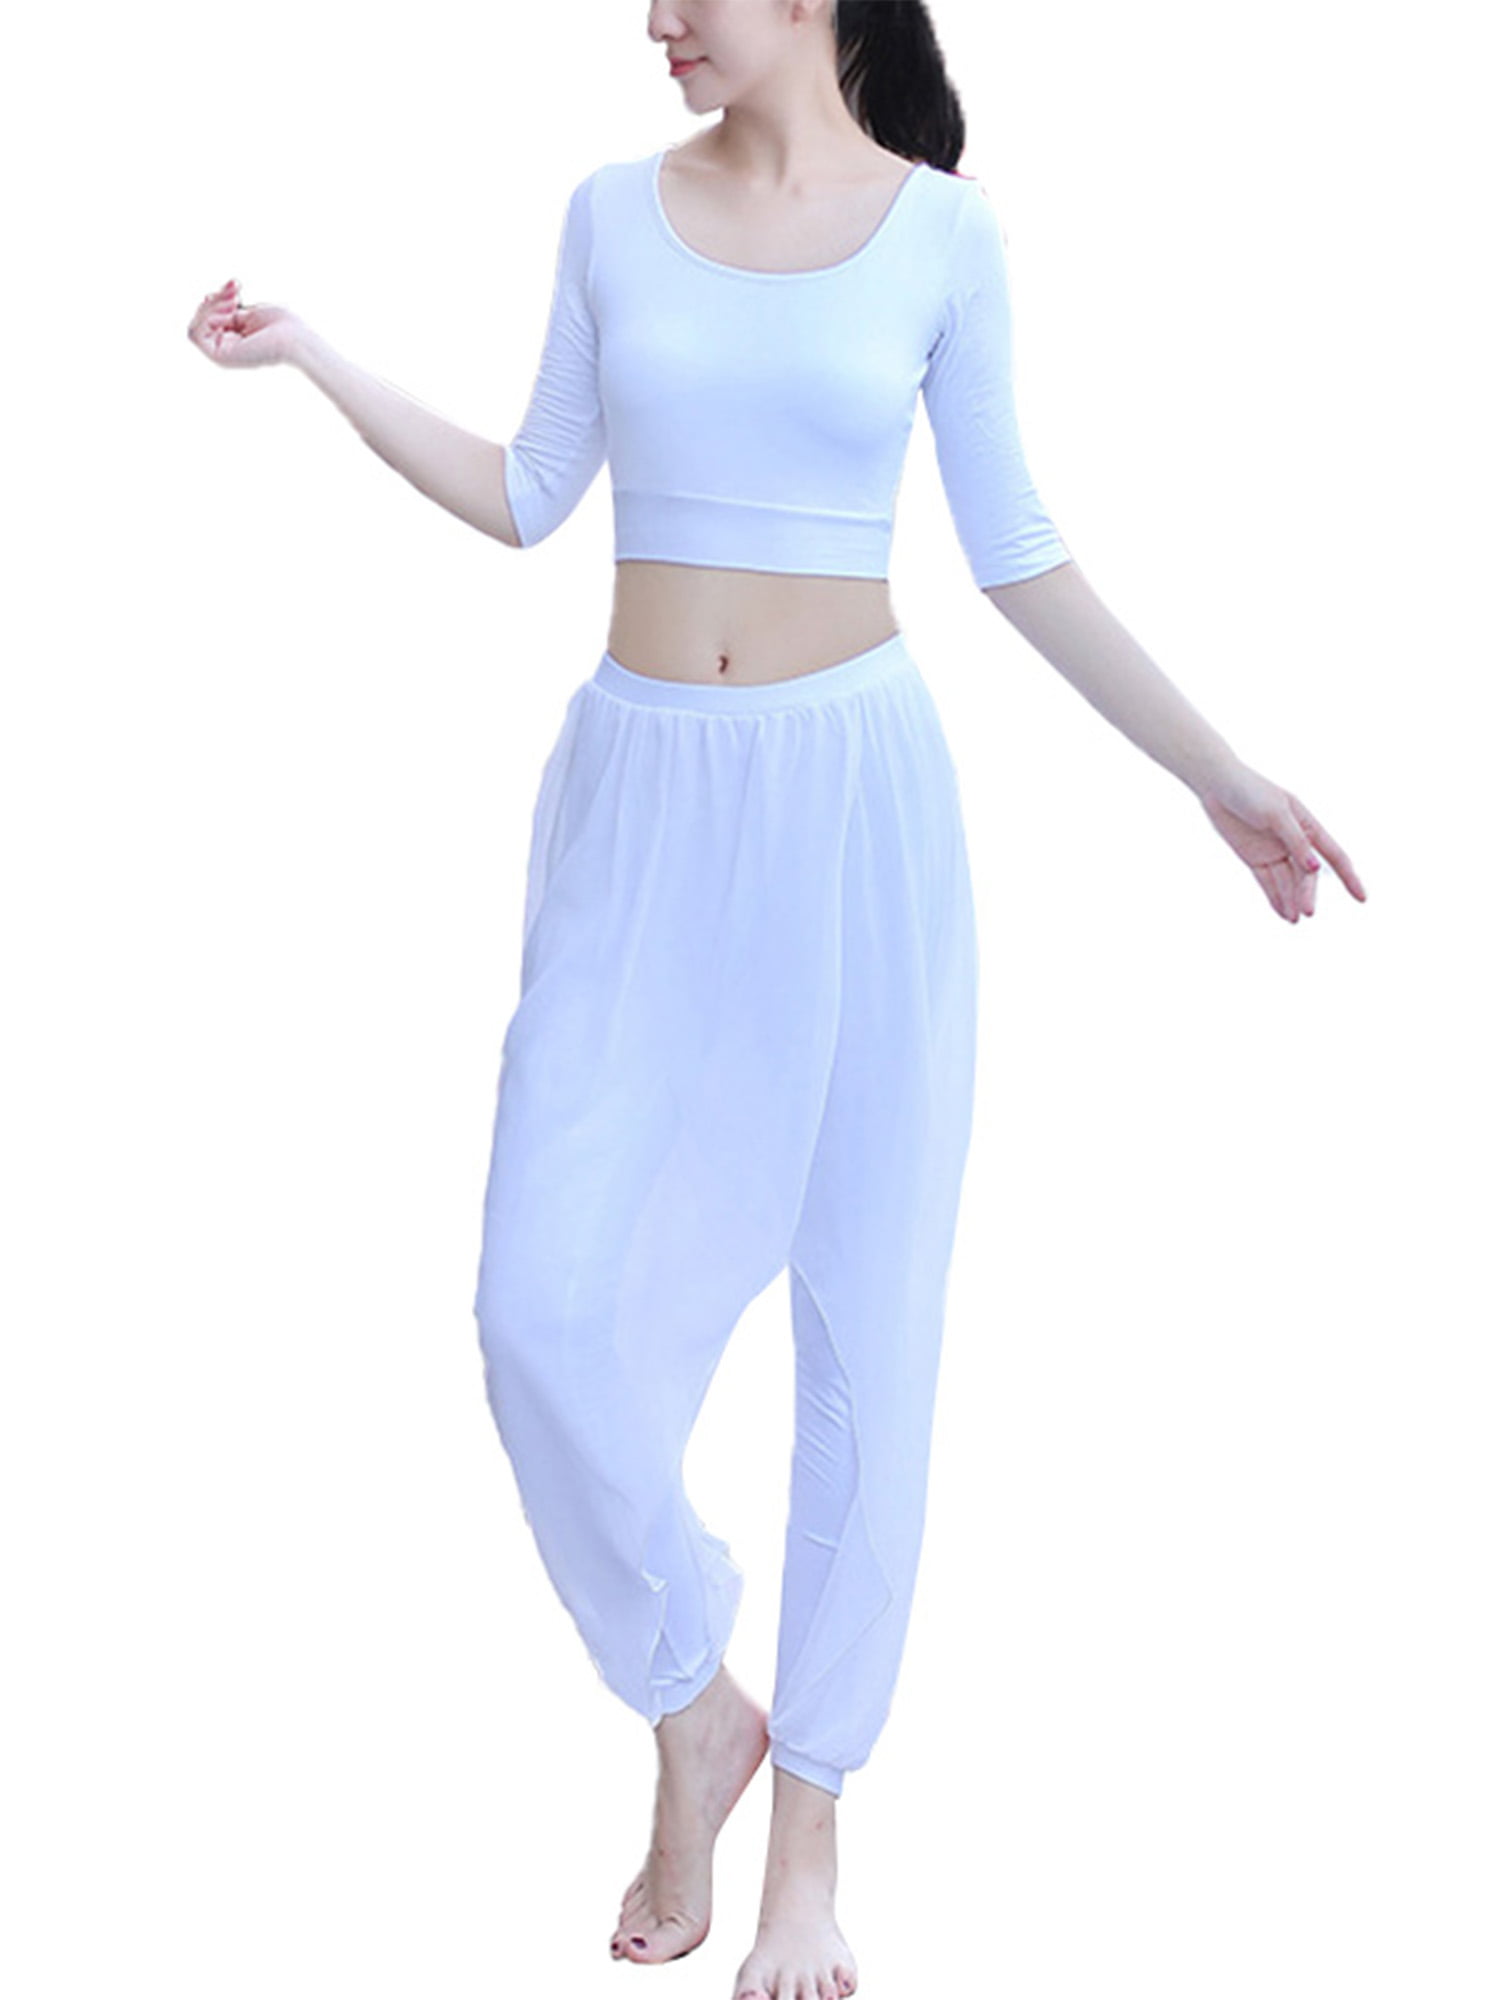 yoga top with elastic waistband